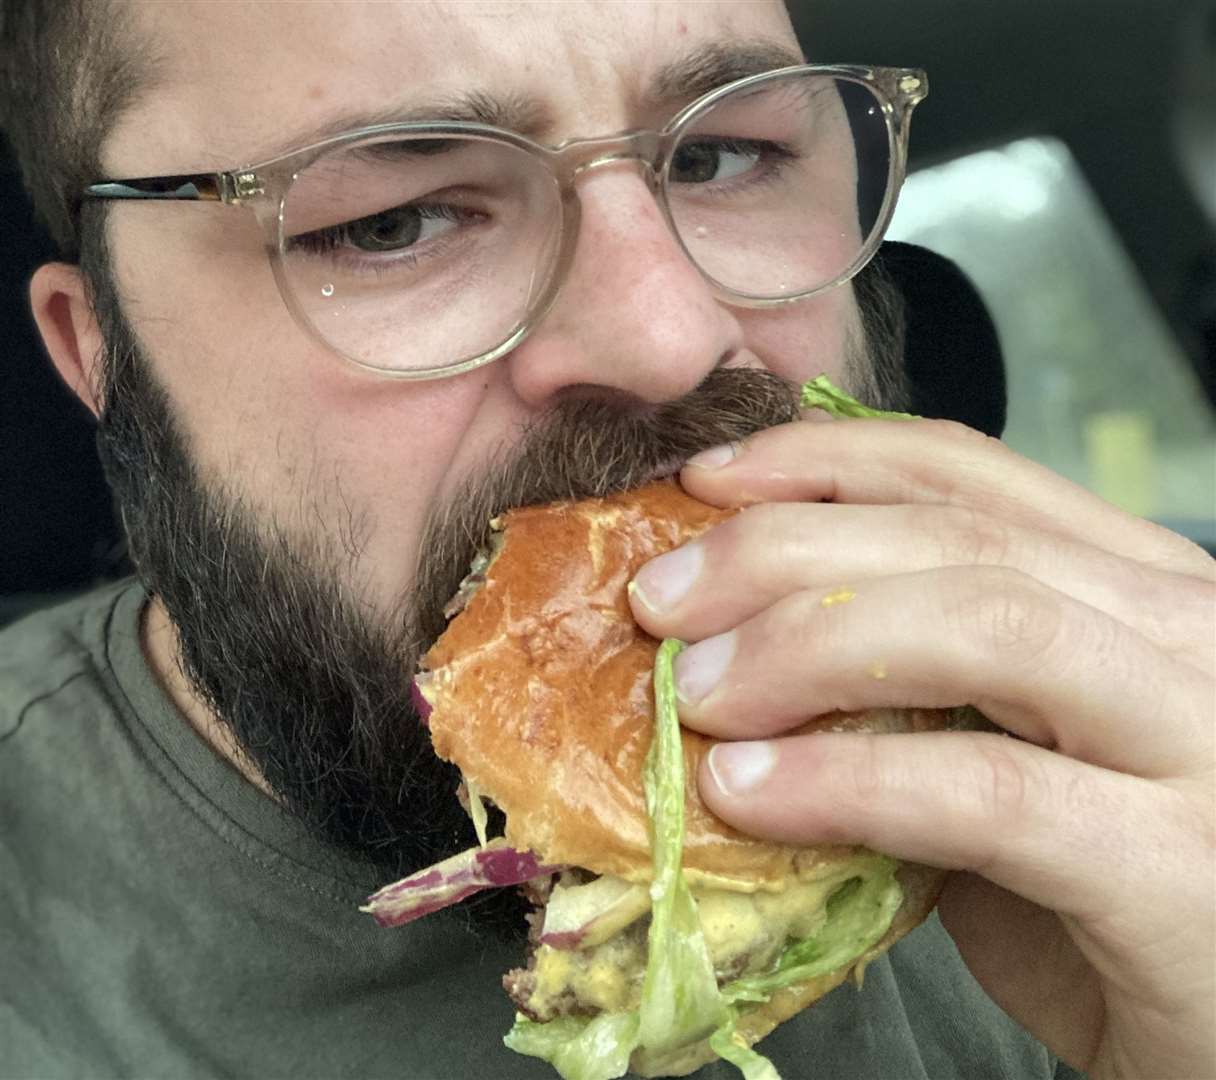 A man furious at traffic tucks in to his burger